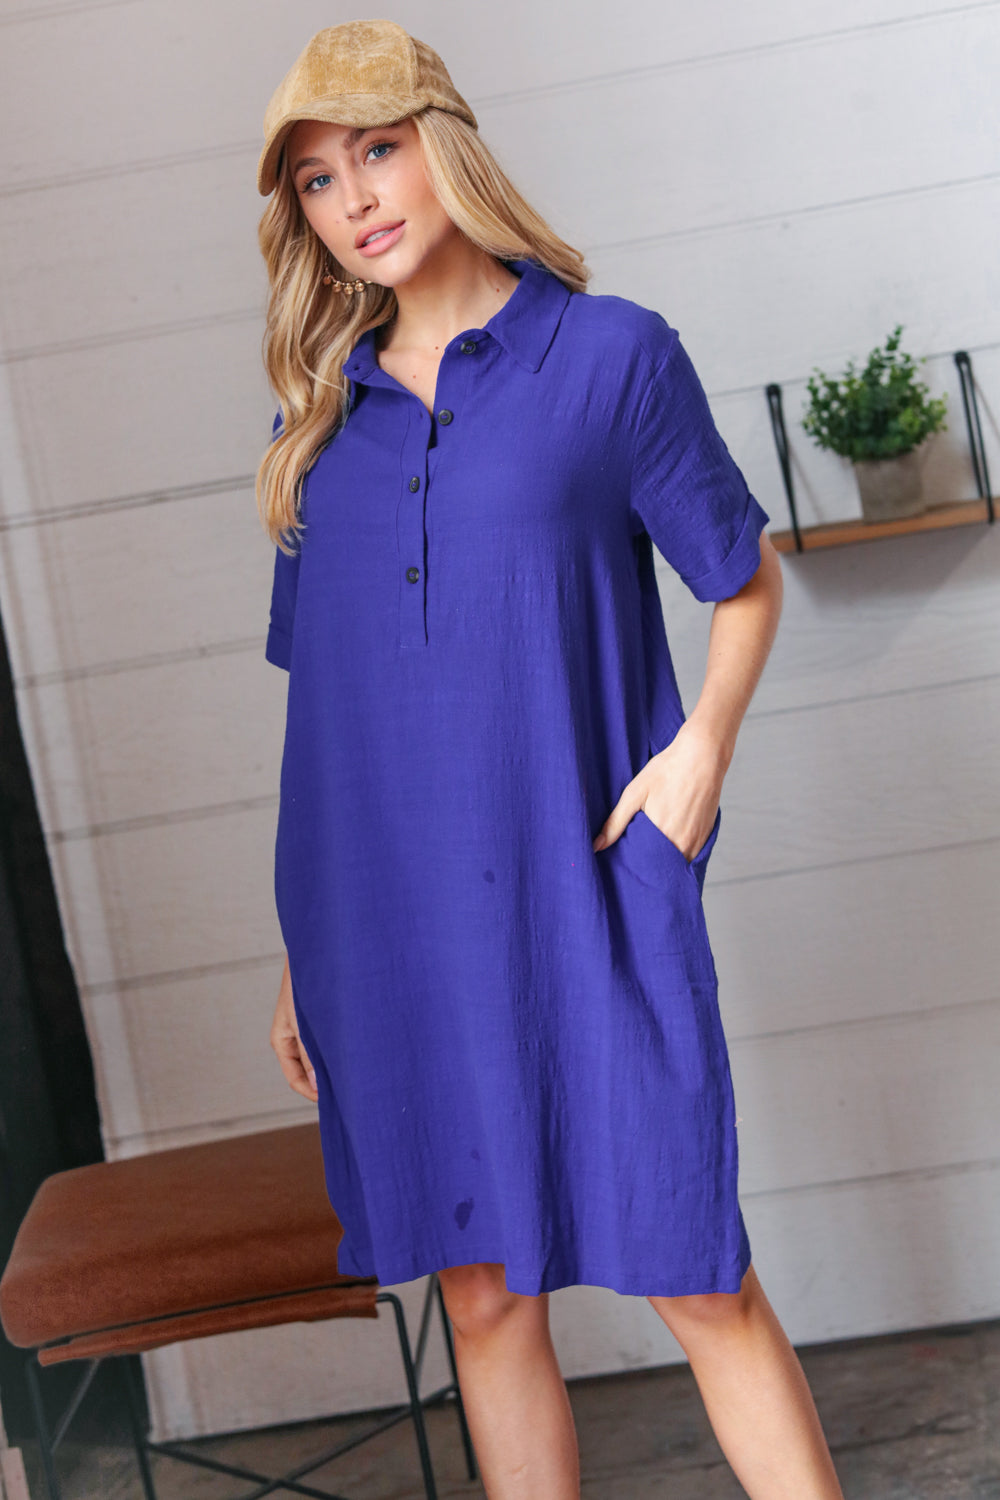 blue button up dress, modest dresses, affordable modest clothing